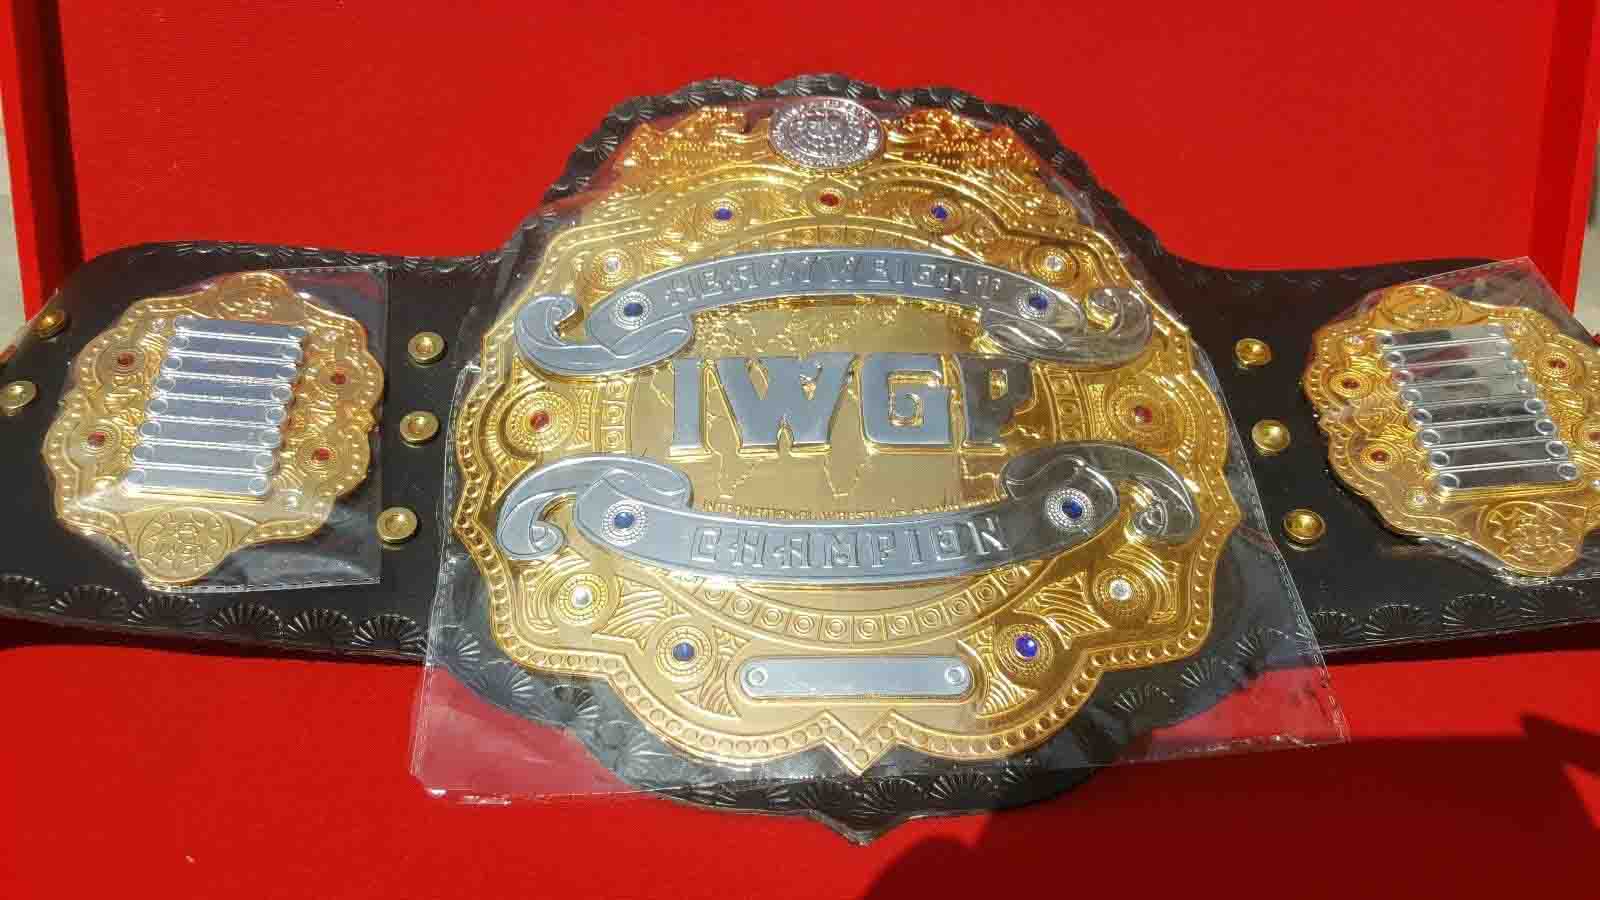 iwgp heavyweight championship belt.adult size belt